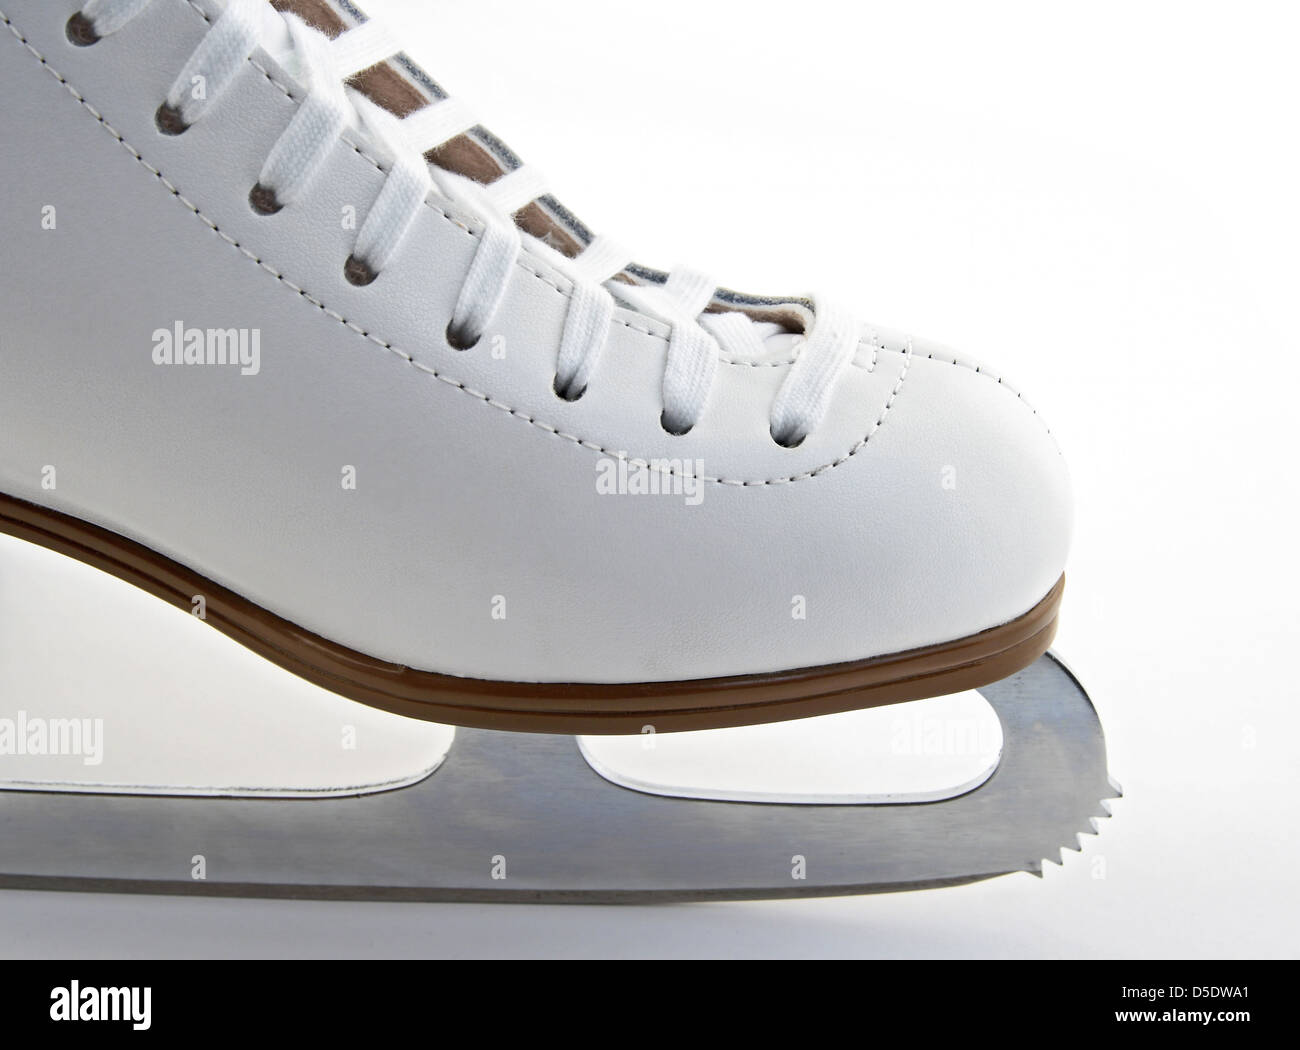 Toe and blade of a white elegant figure skate Stock Photo - Alamy